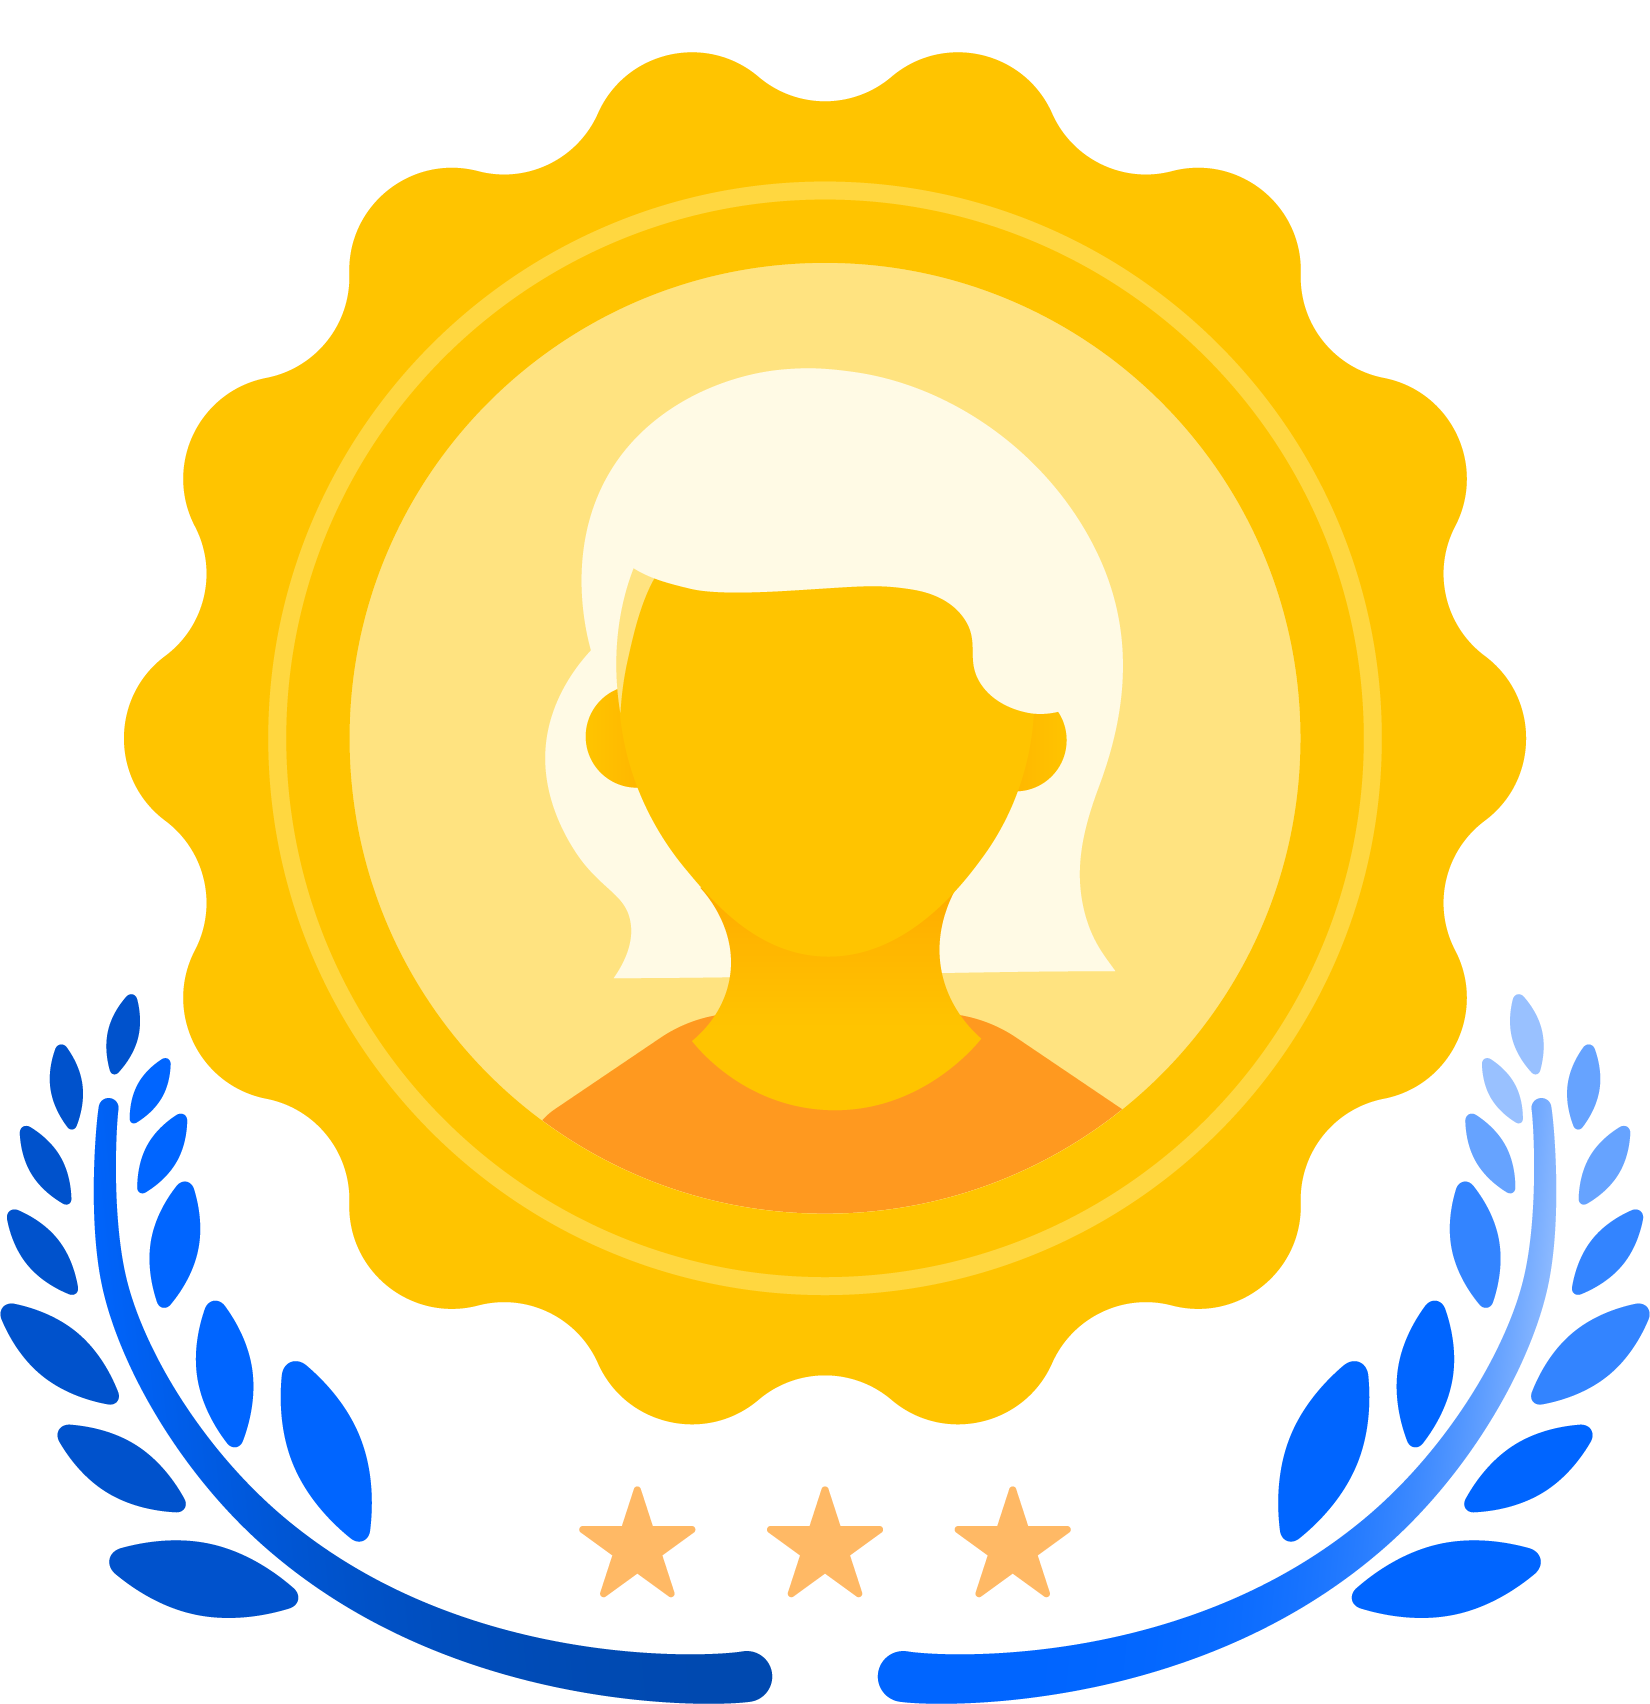 Medalion